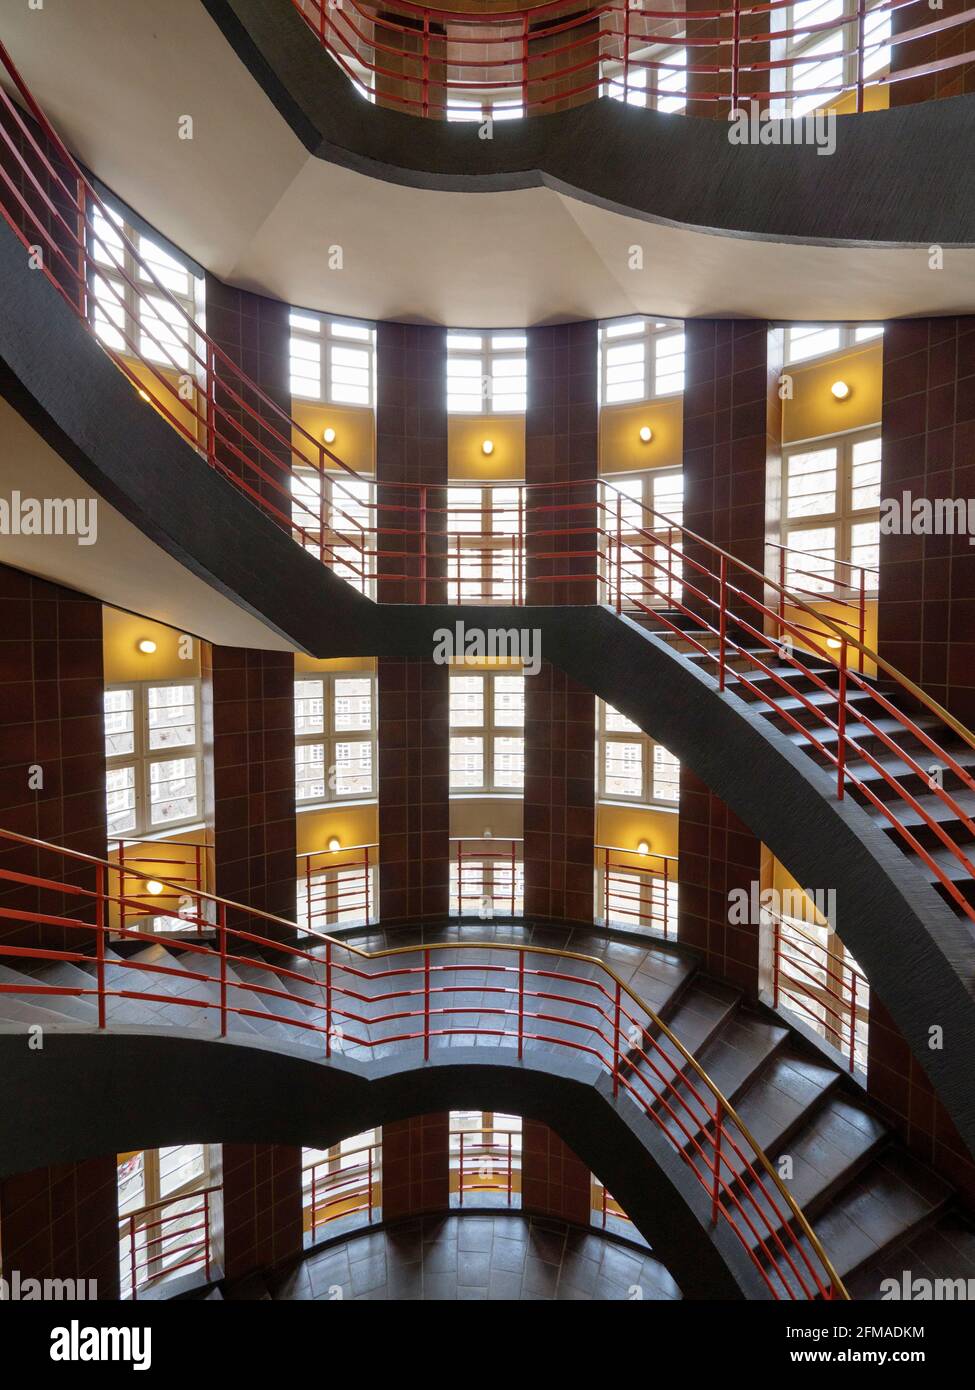 Staircase Sprinkenhof nel Kontorhausviertel, patrimonio mondiale dell'UNESCO, Amburgo, Germania Foto Stock